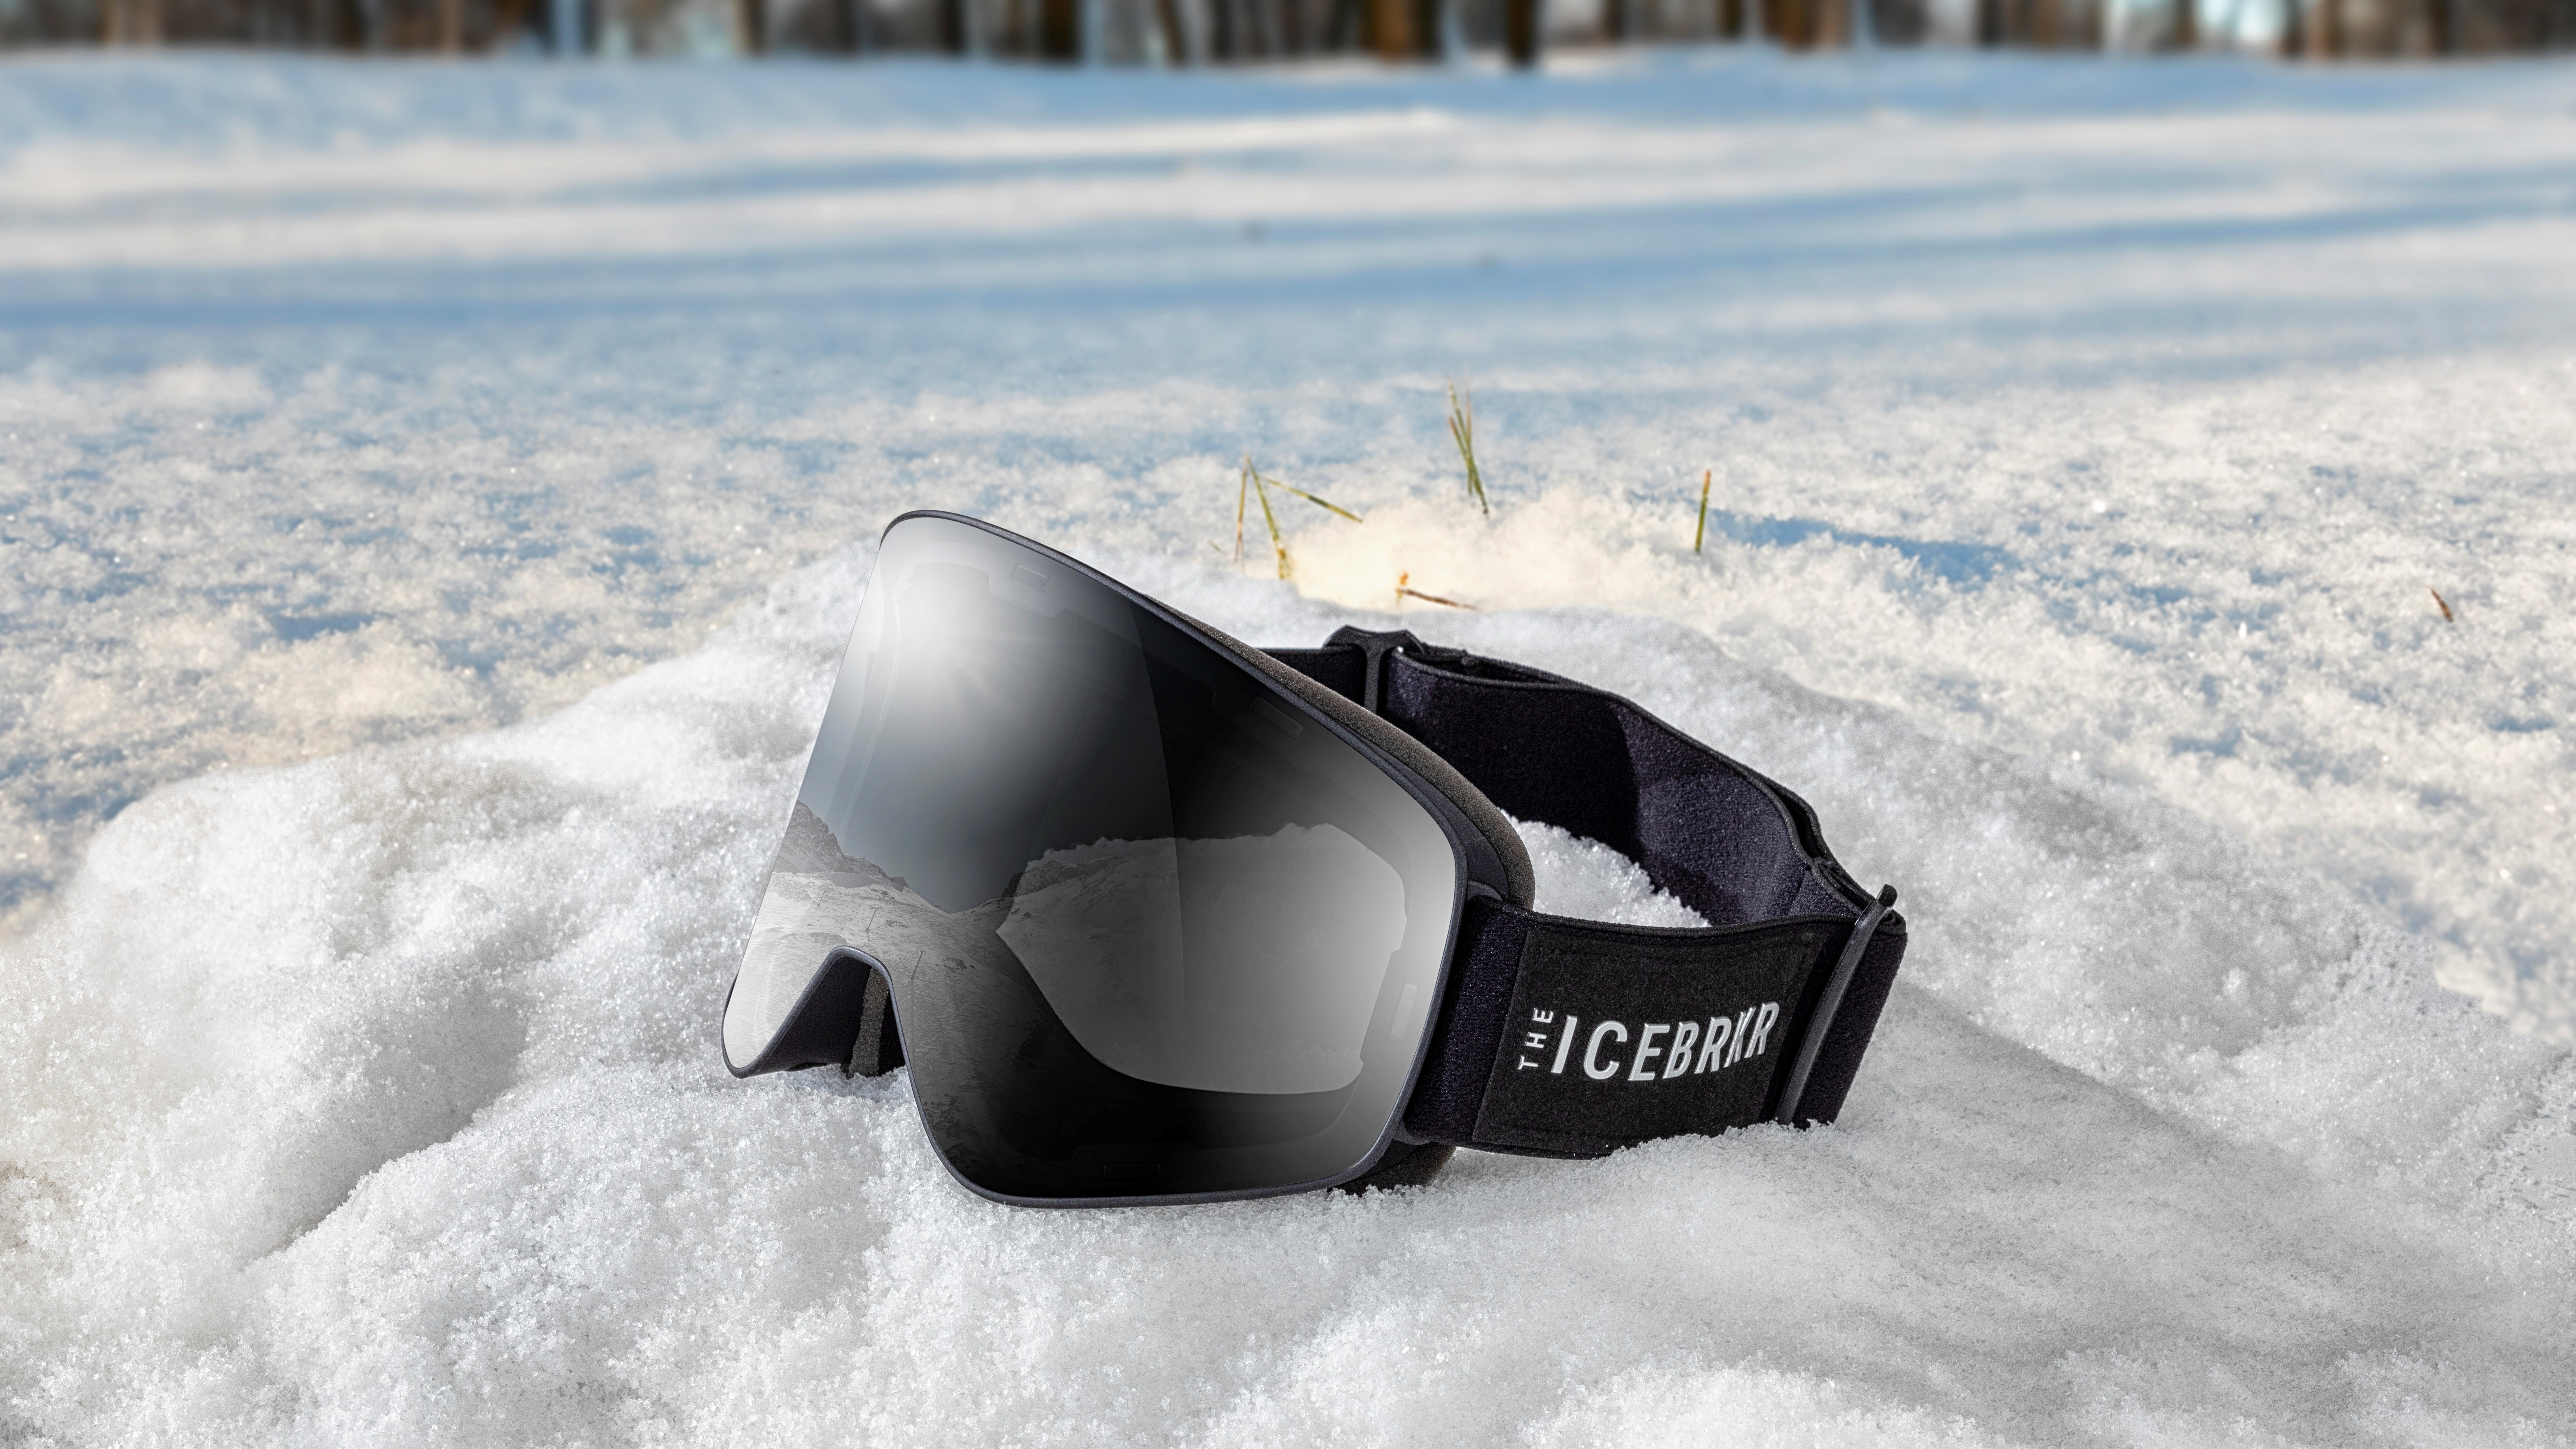 bONE Tech IceBRKR ski goggles